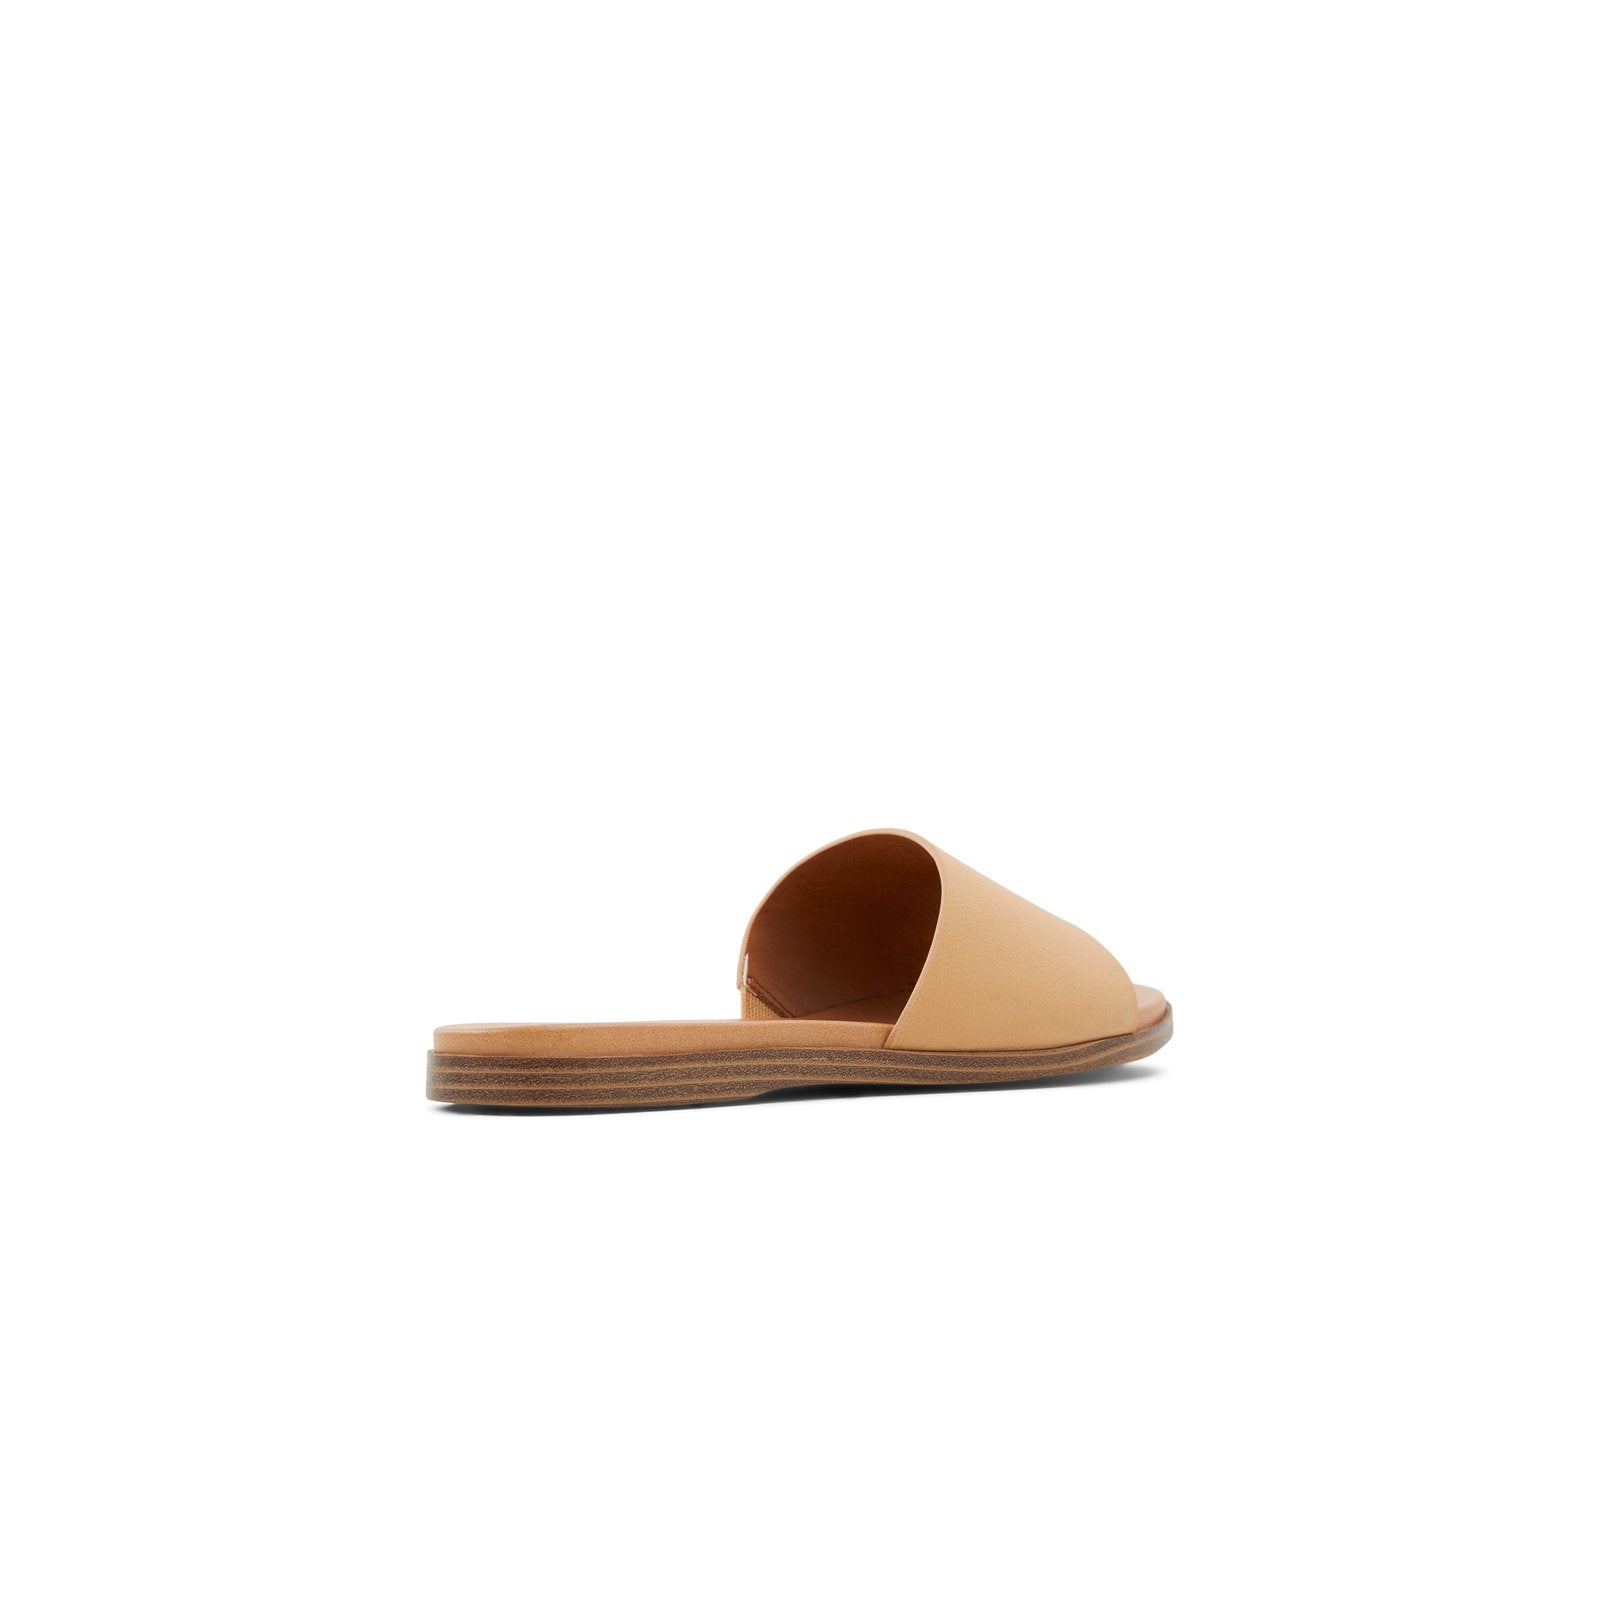 Birdie / Flat Sandals Women Shoes - Medium Beige - CALL IT SPRING KSA